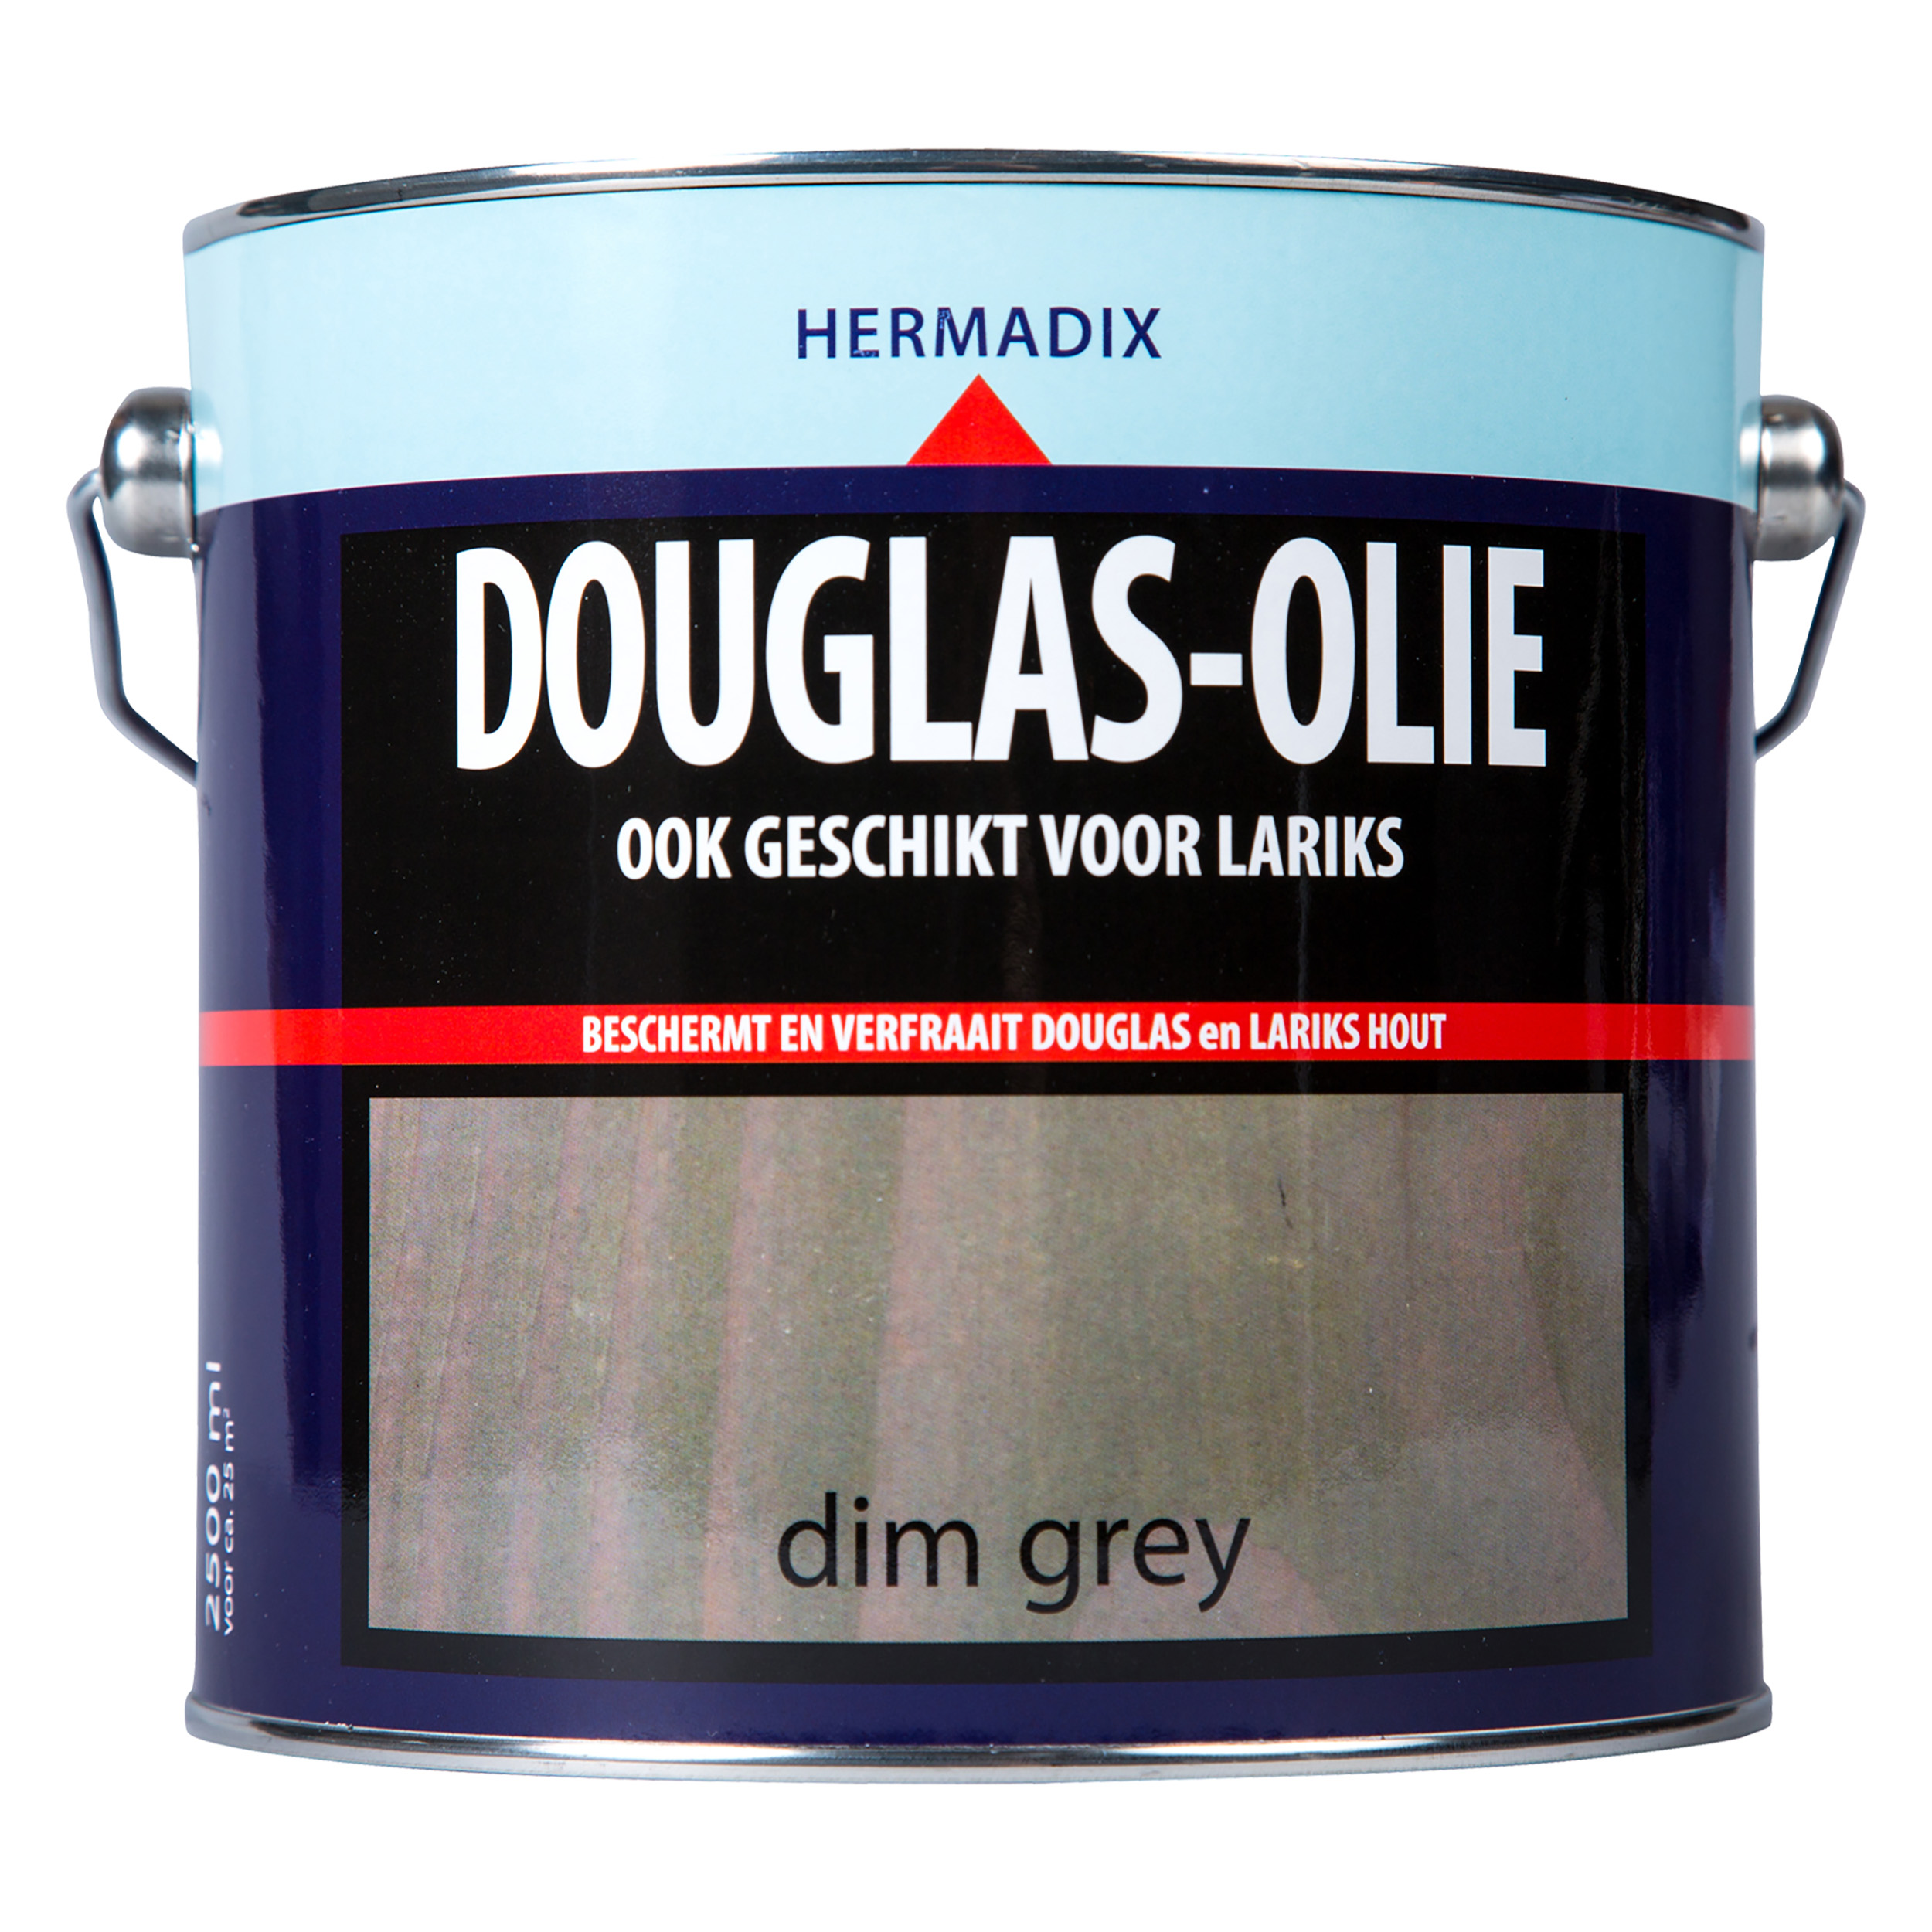 25.897.02 Hermadix  douglas-olie mat - 2500 ml - dim grey